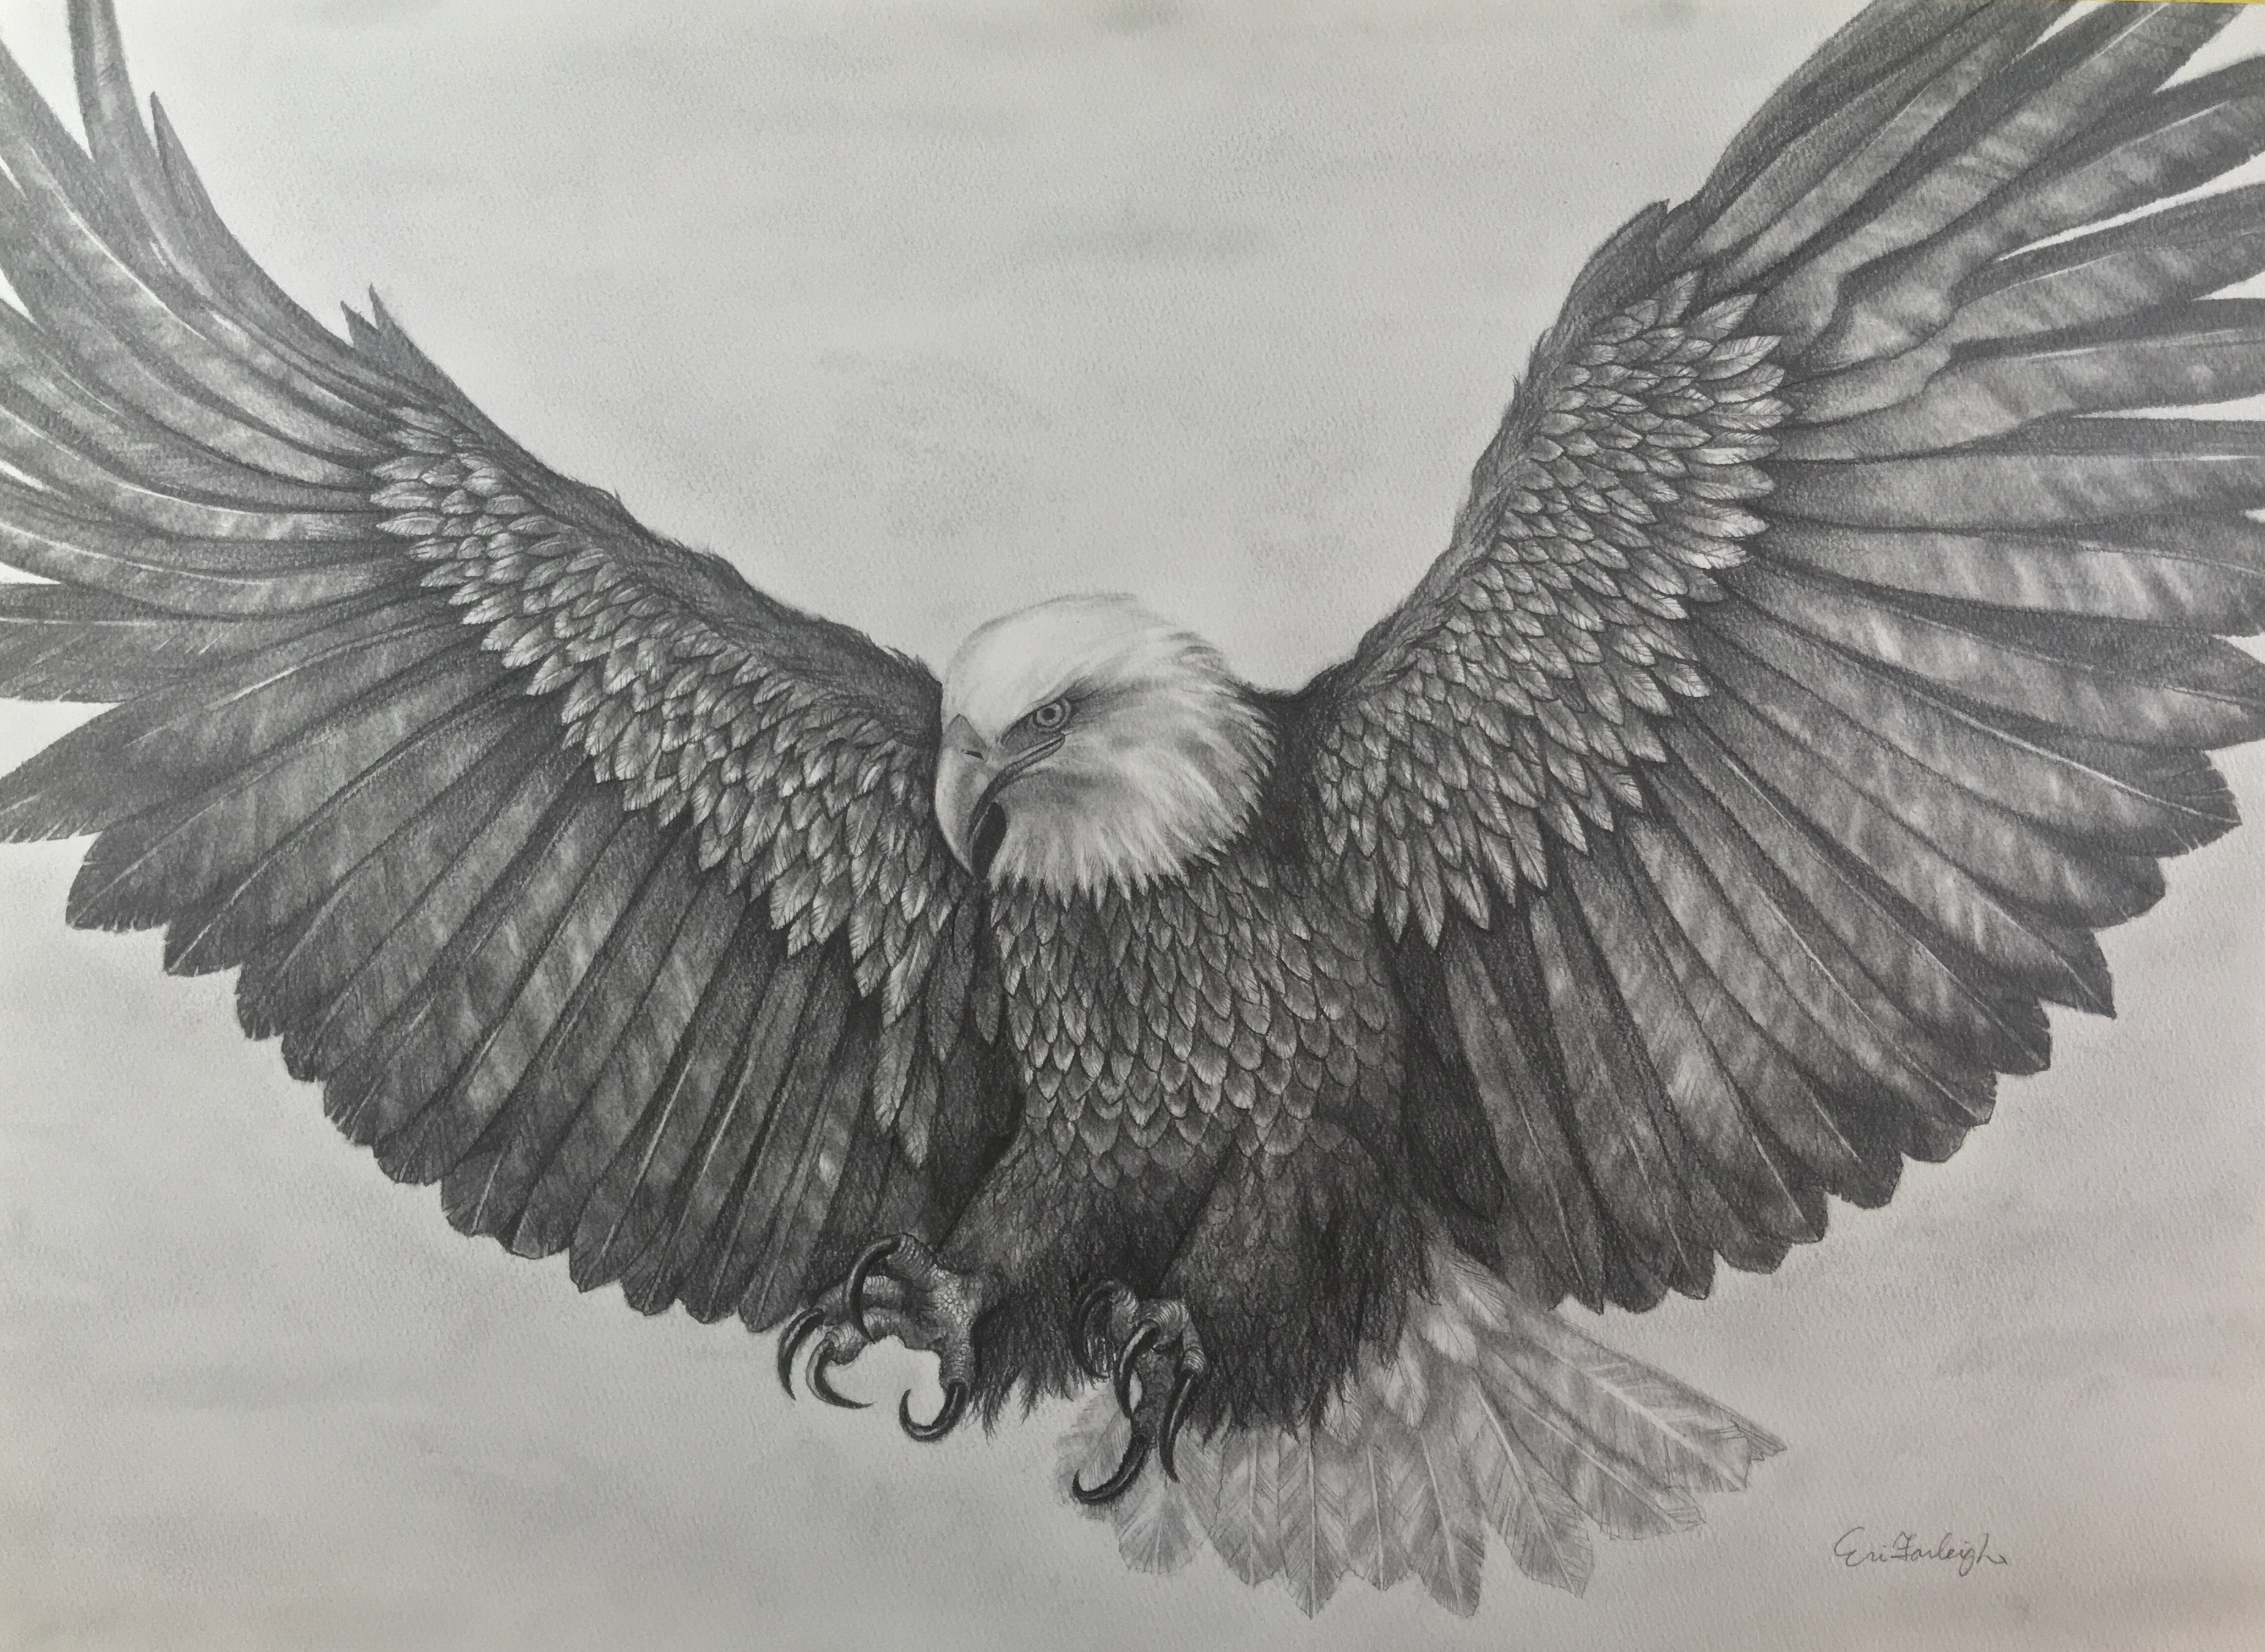 Flying eagle | アート・インテリア絵画の通販・販売サイト